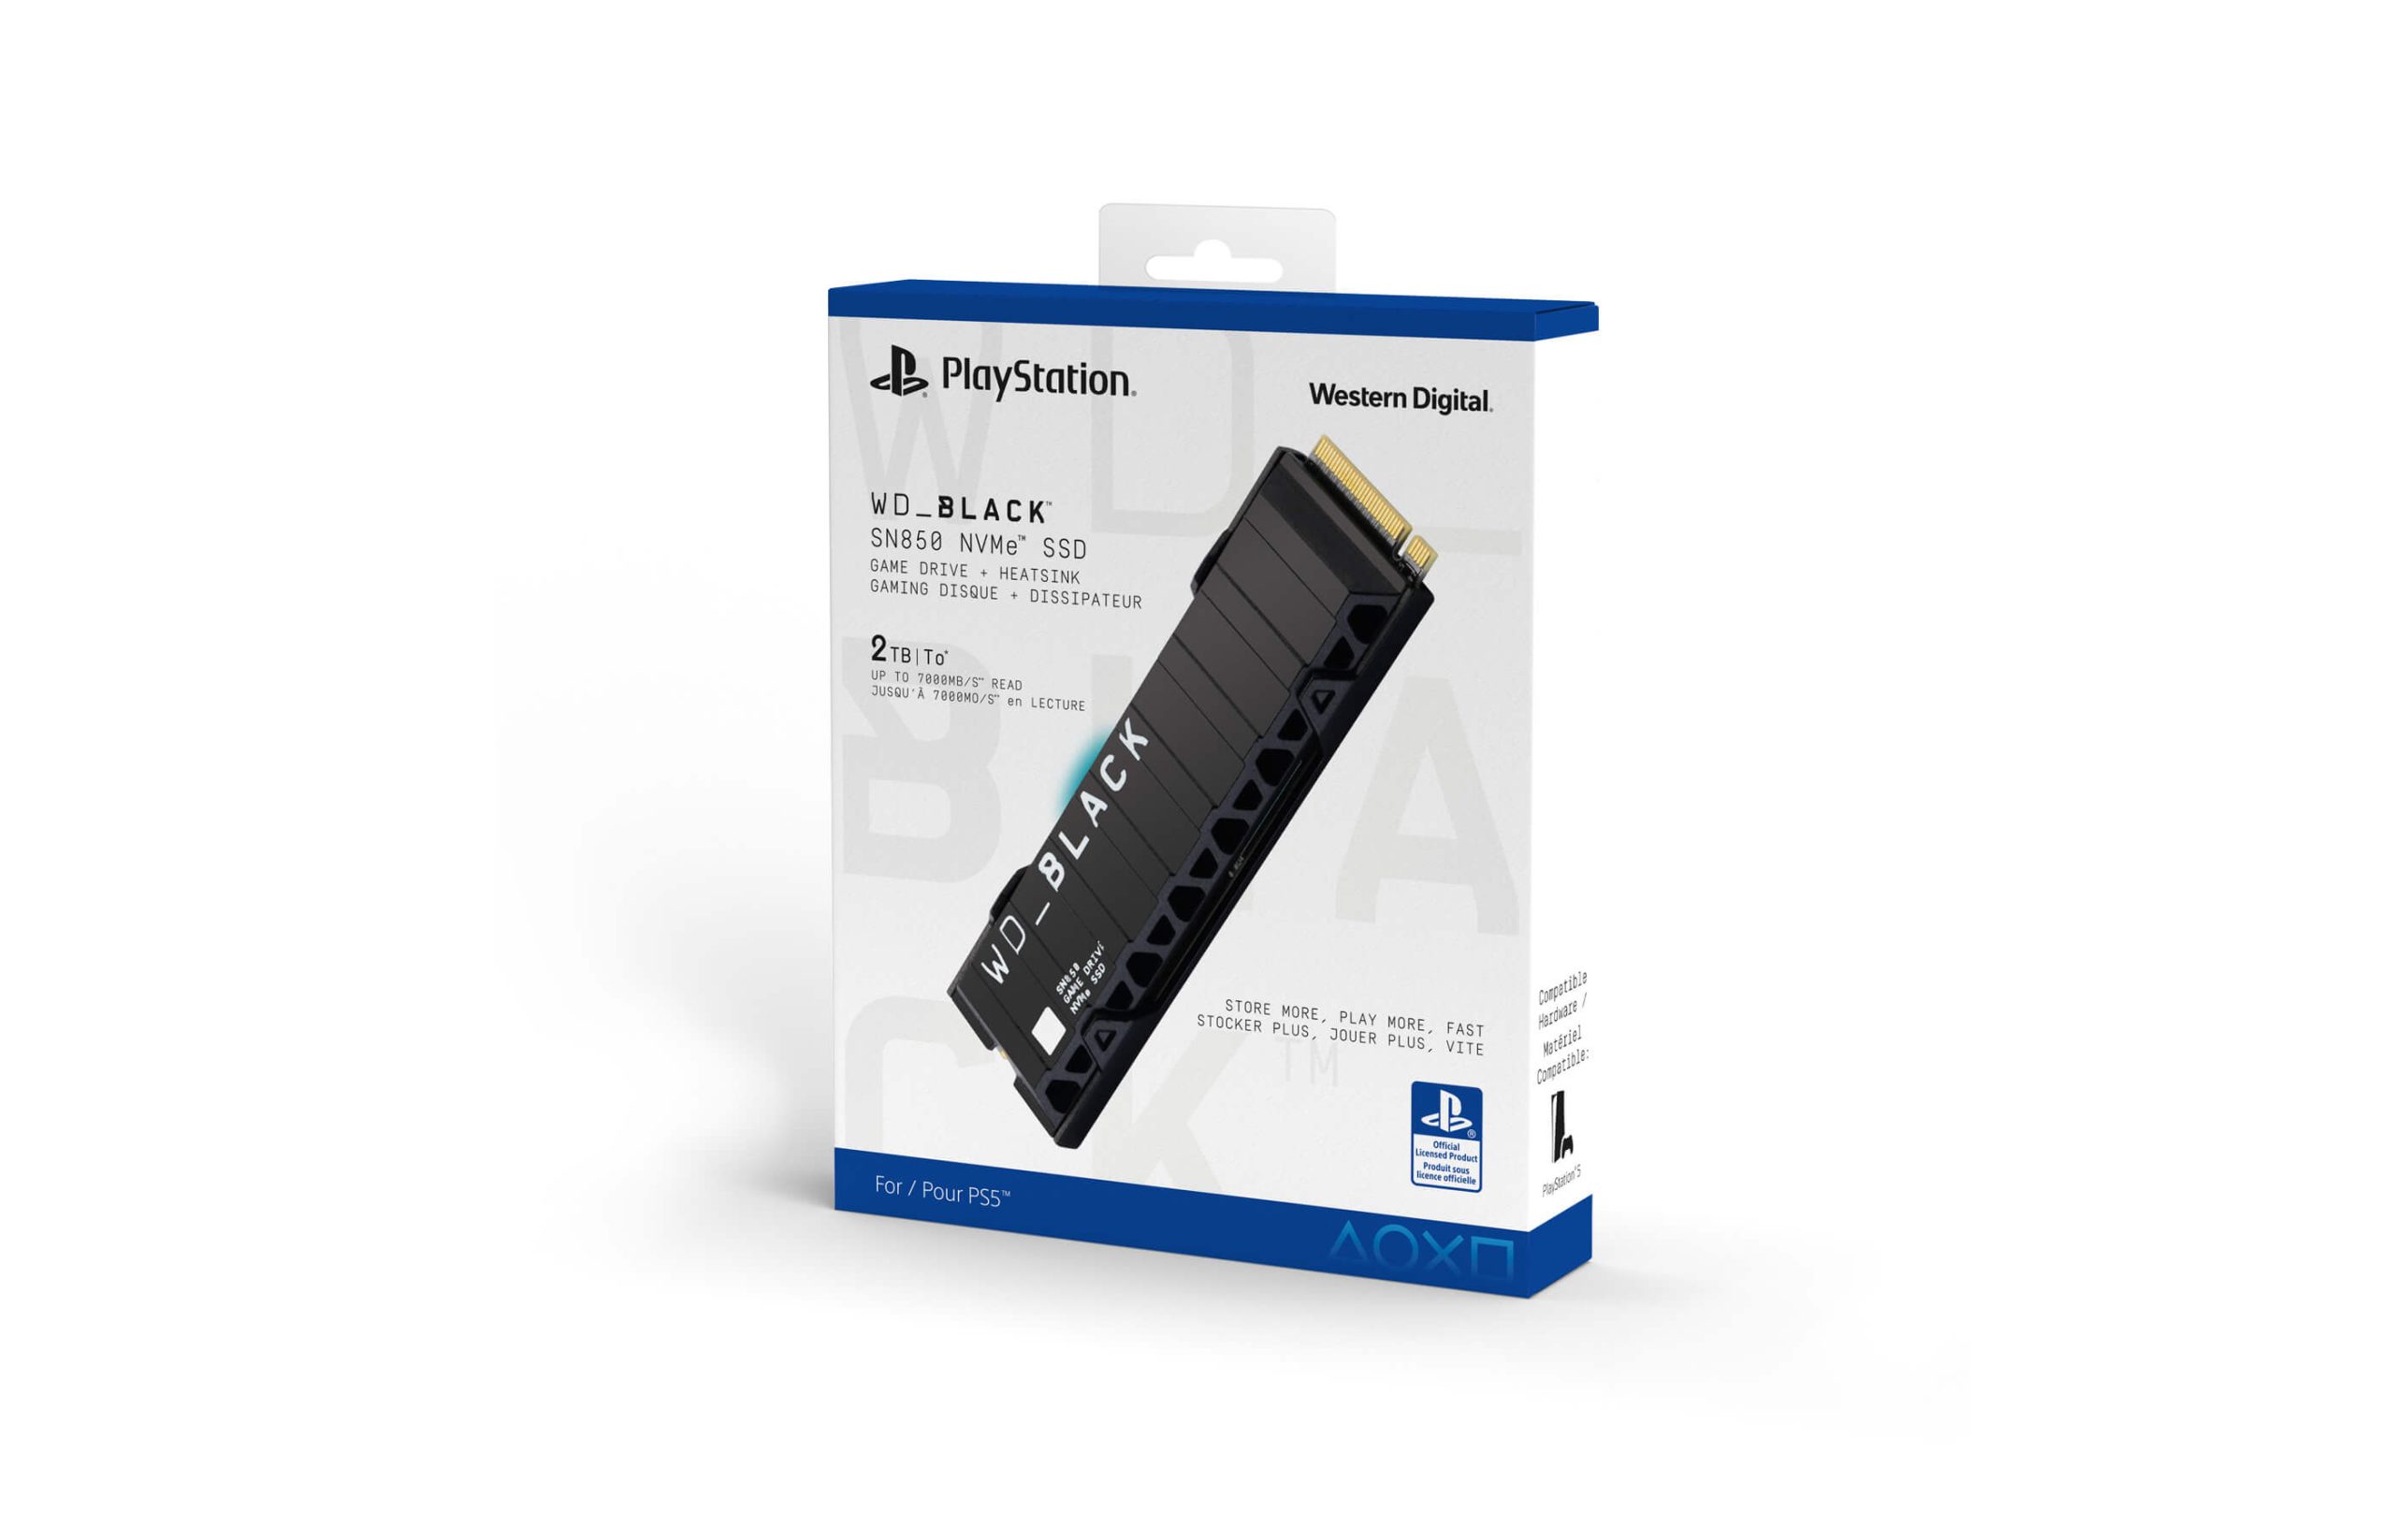 WD_Black_PS5_packaging